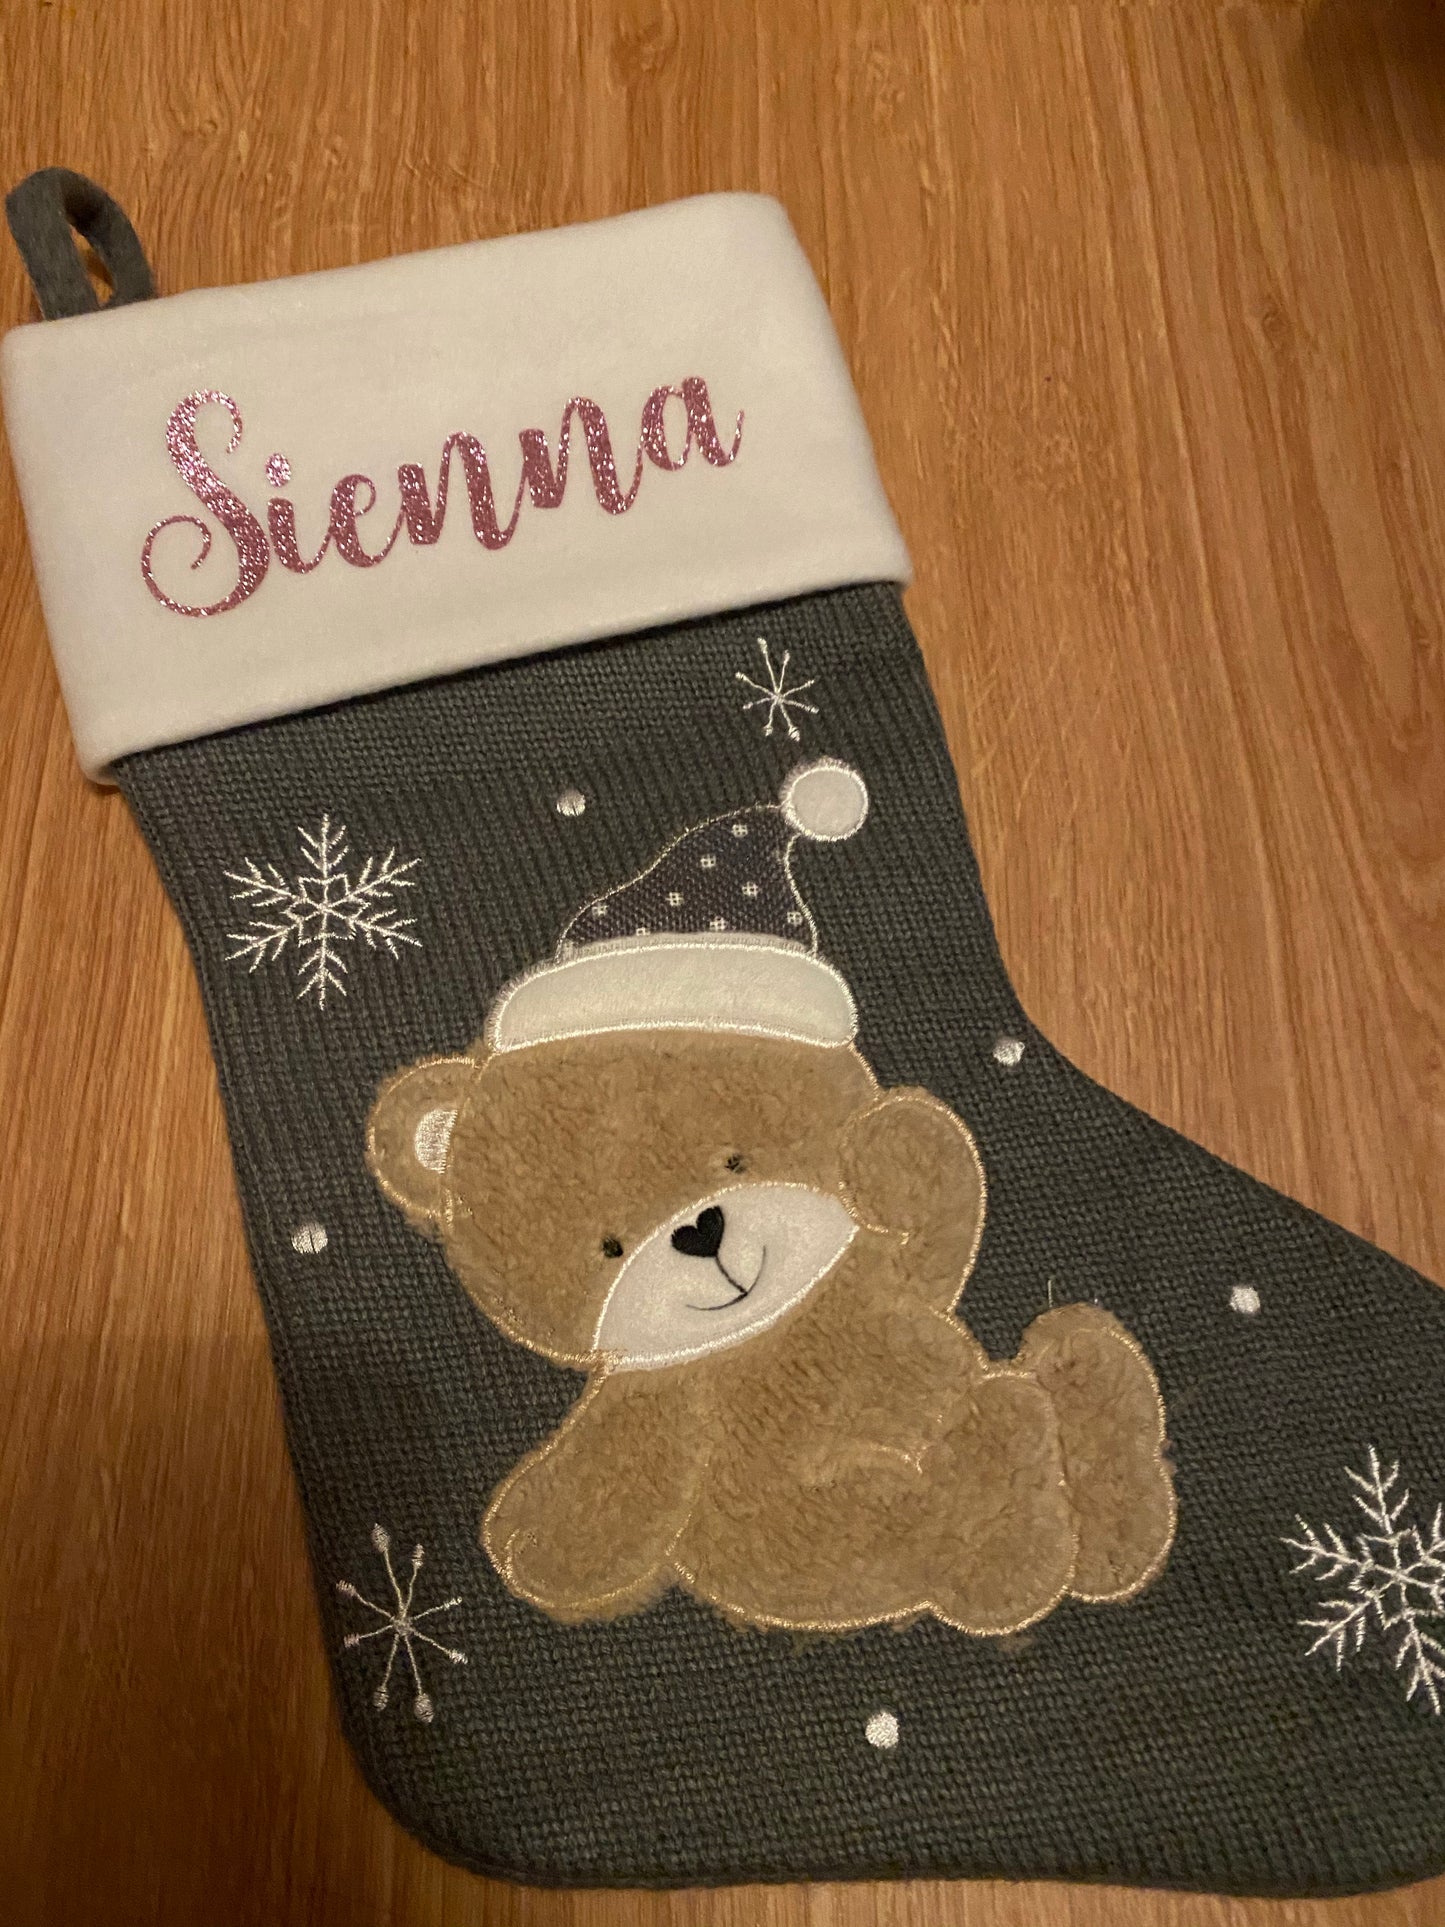 Personalised Christmas stocking